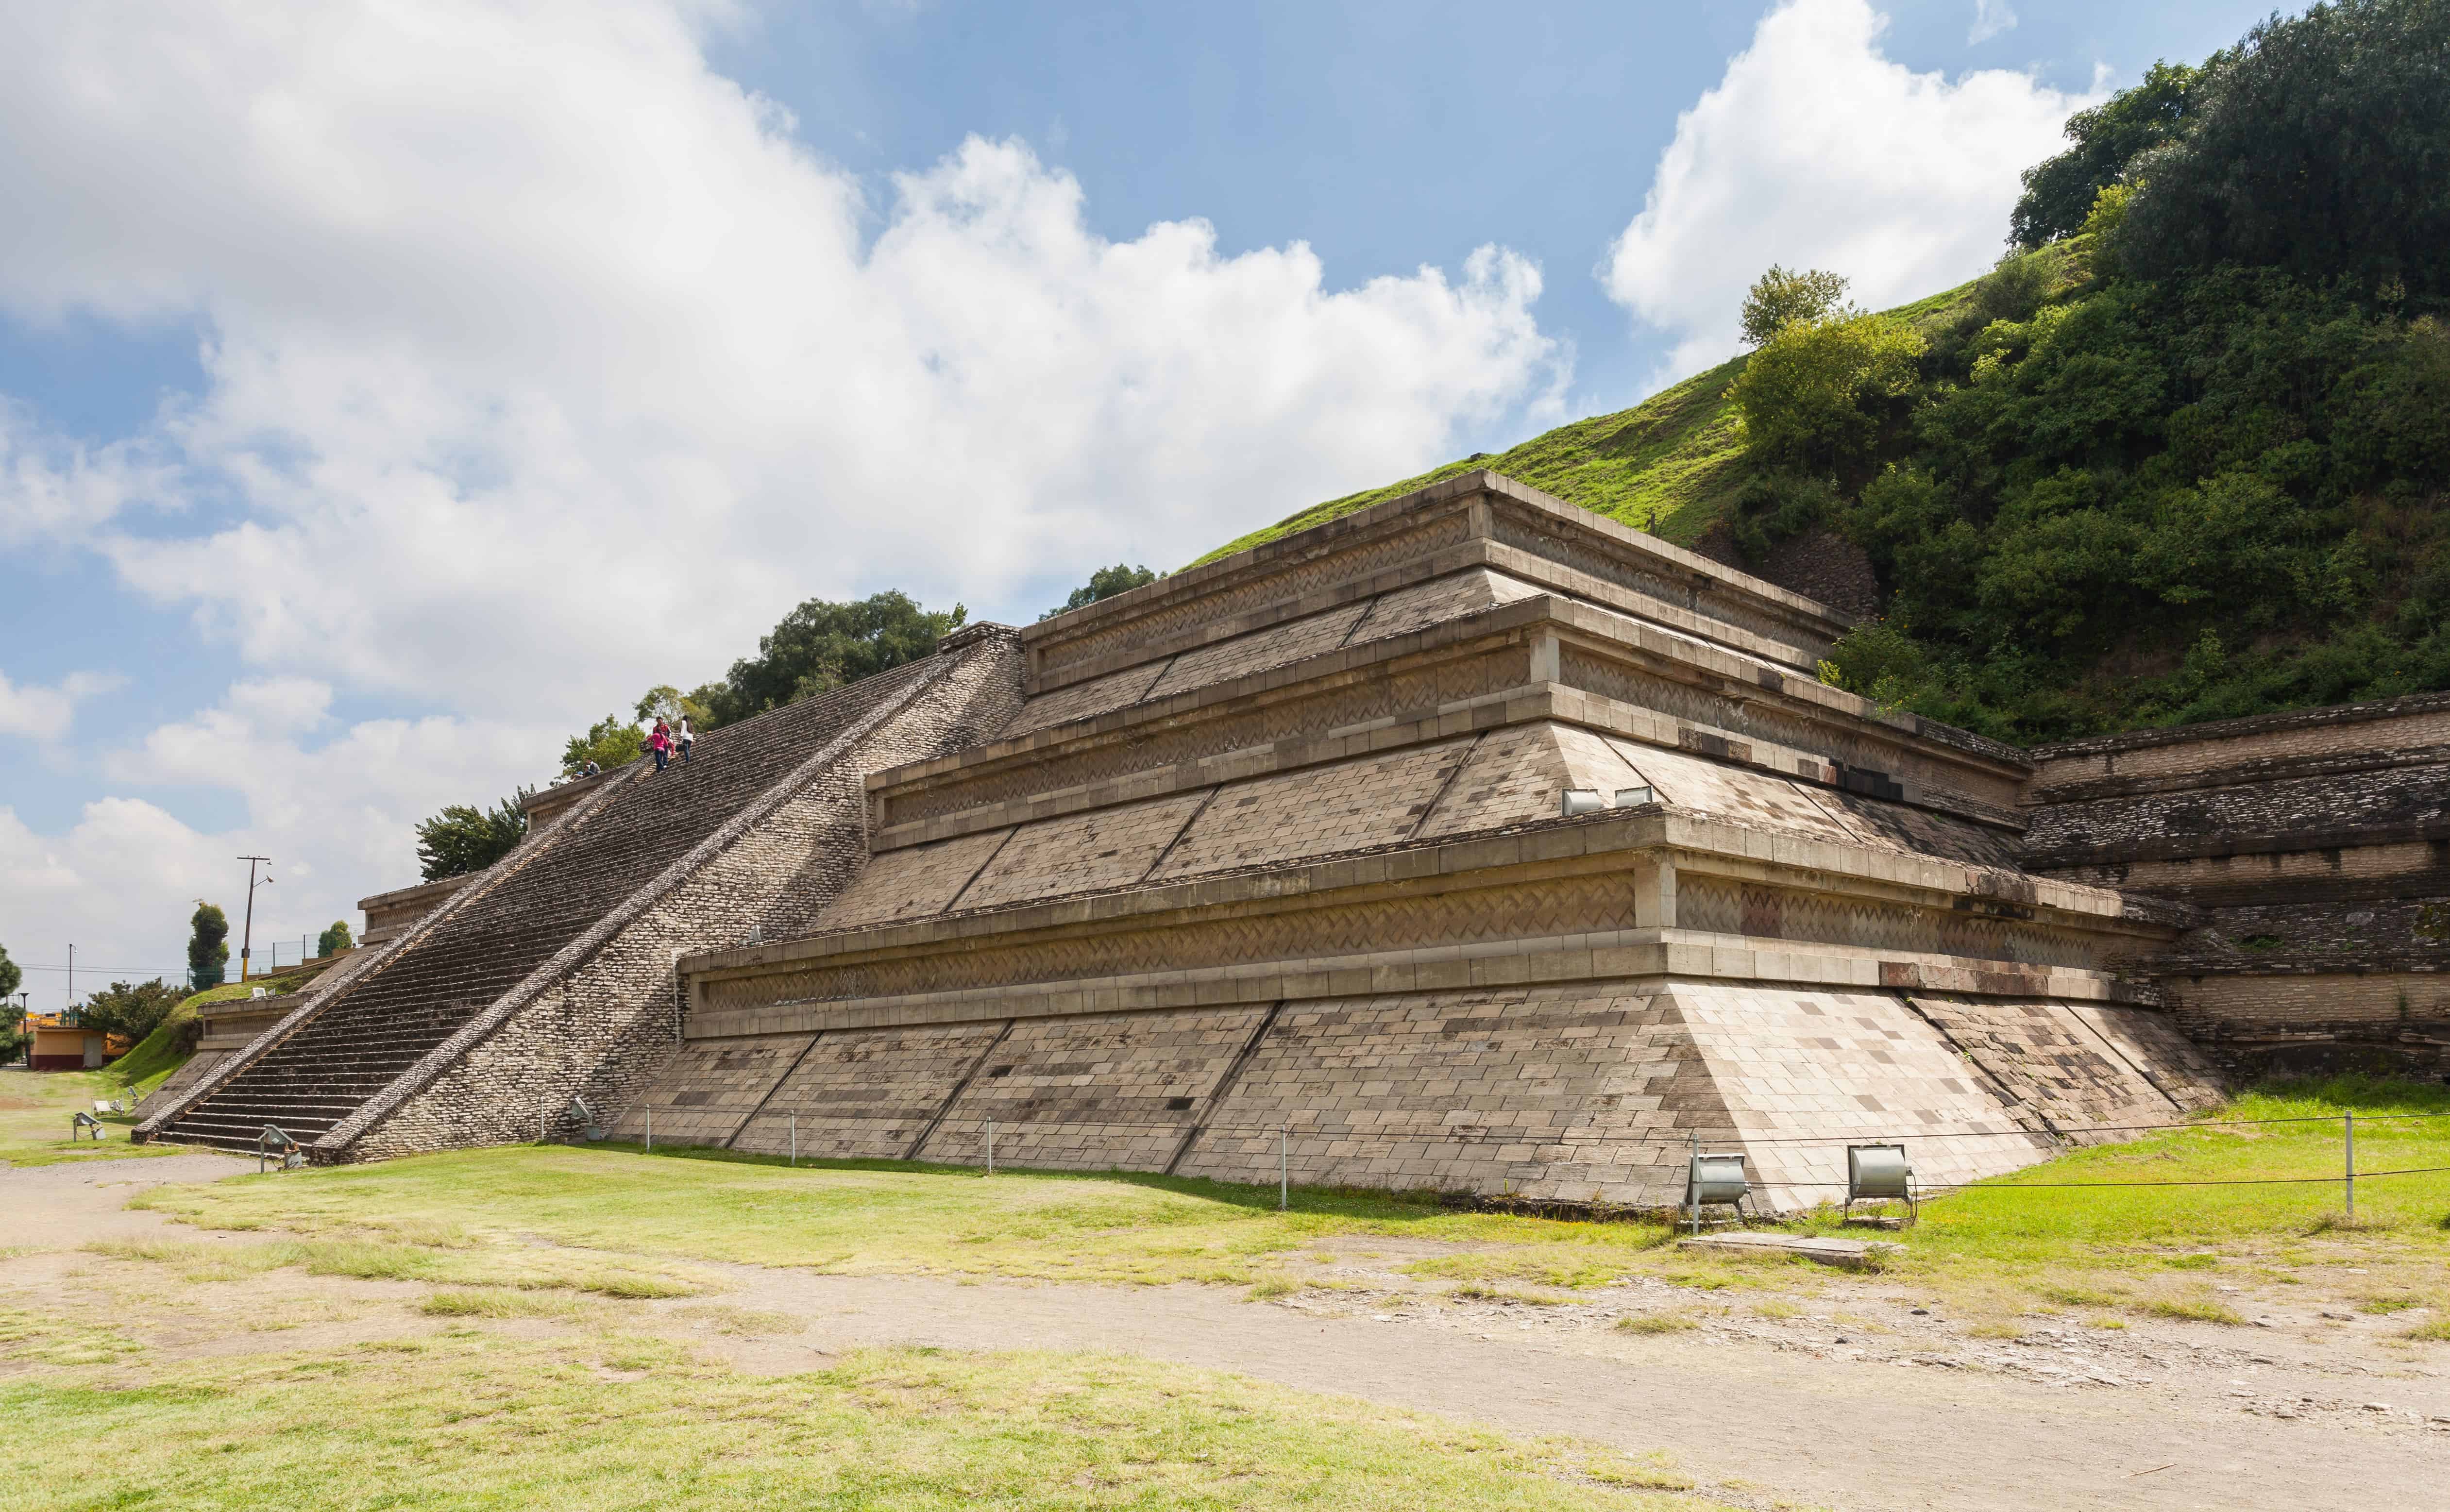 The base of the great Cholula Pyramid. Image by Poco a poco/Mexico.